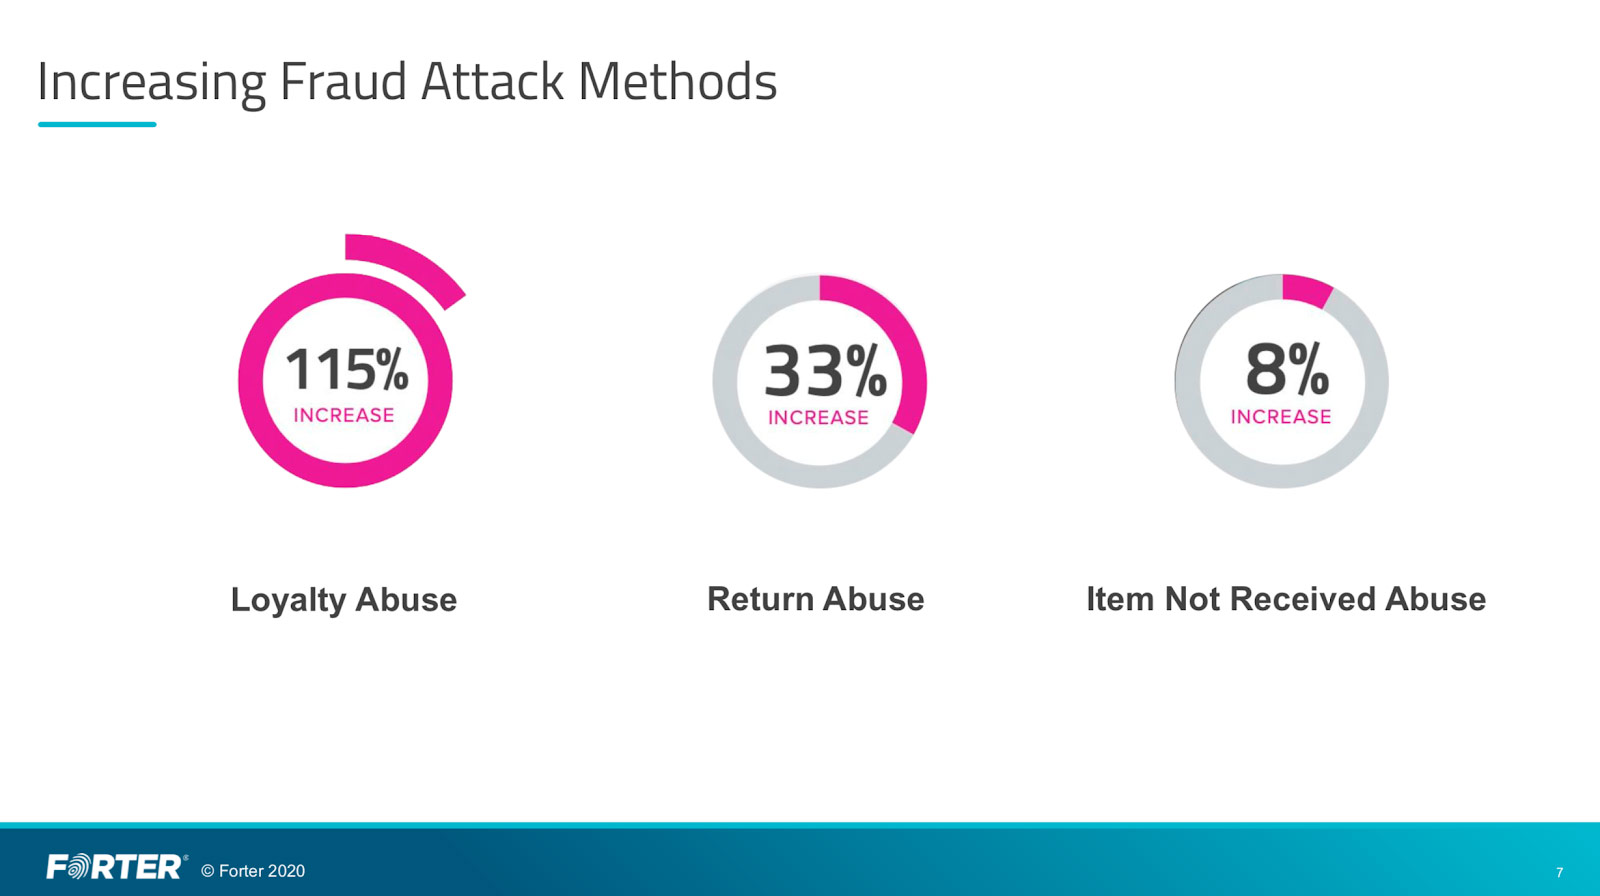 Increasing fraud attack methods info